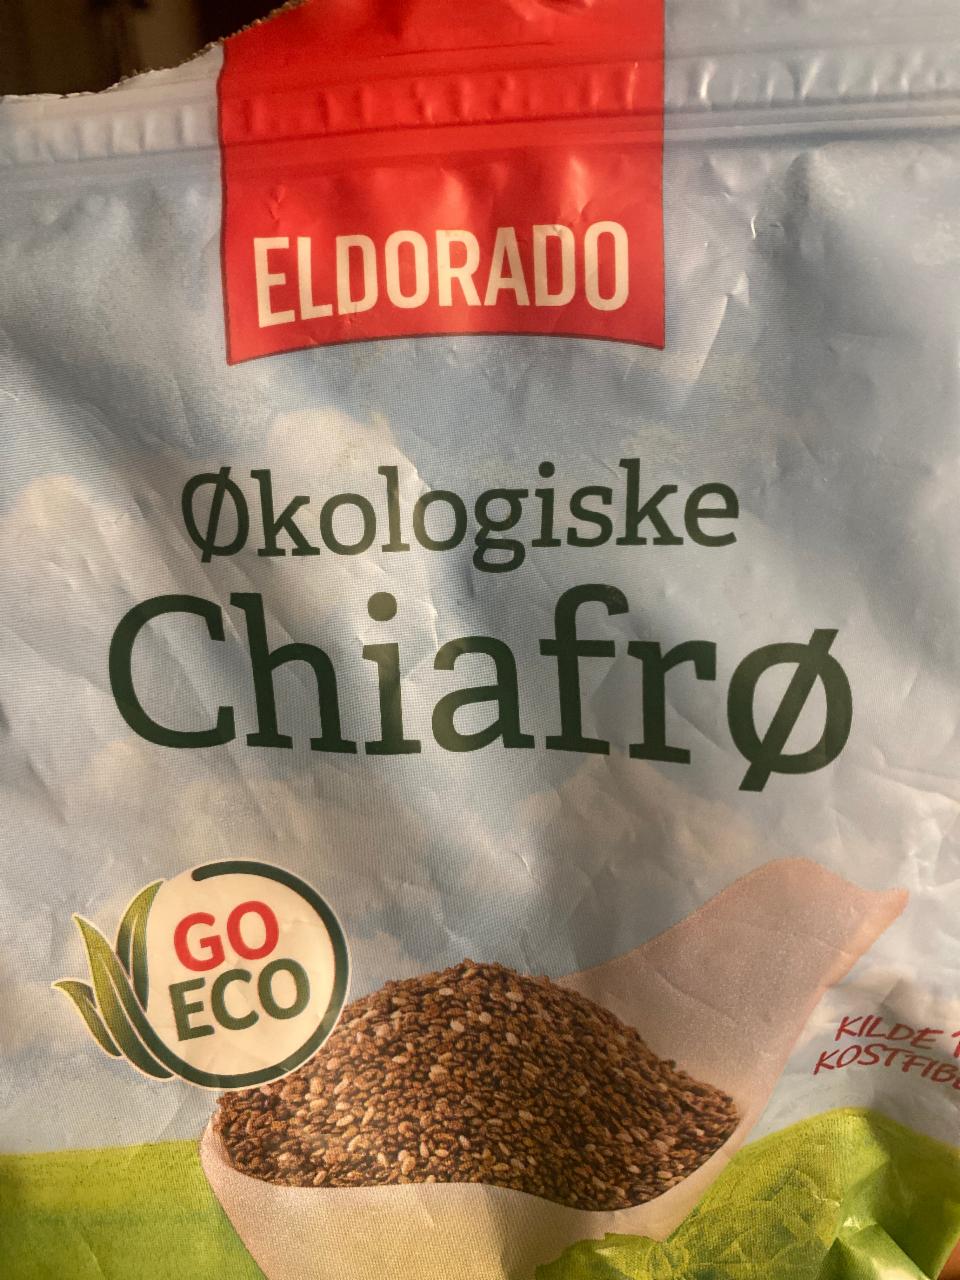 Fotografie - Økologiske Chiafrø Eldorado